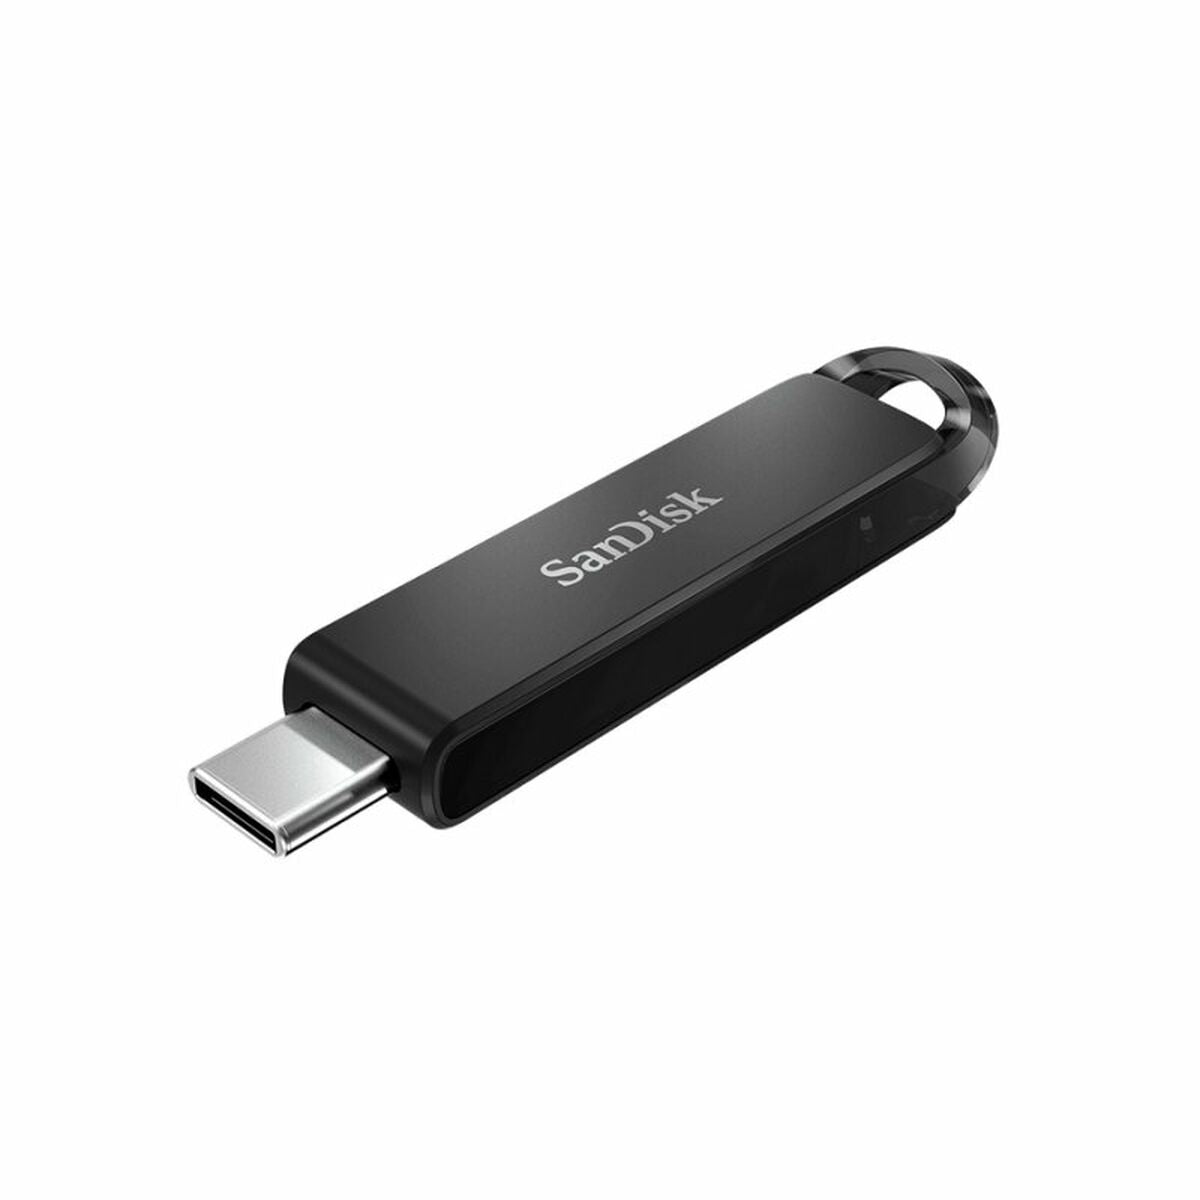 Memoria USB SanDisk SDCZ460-032G-G46 32 GB Negro 32 GB